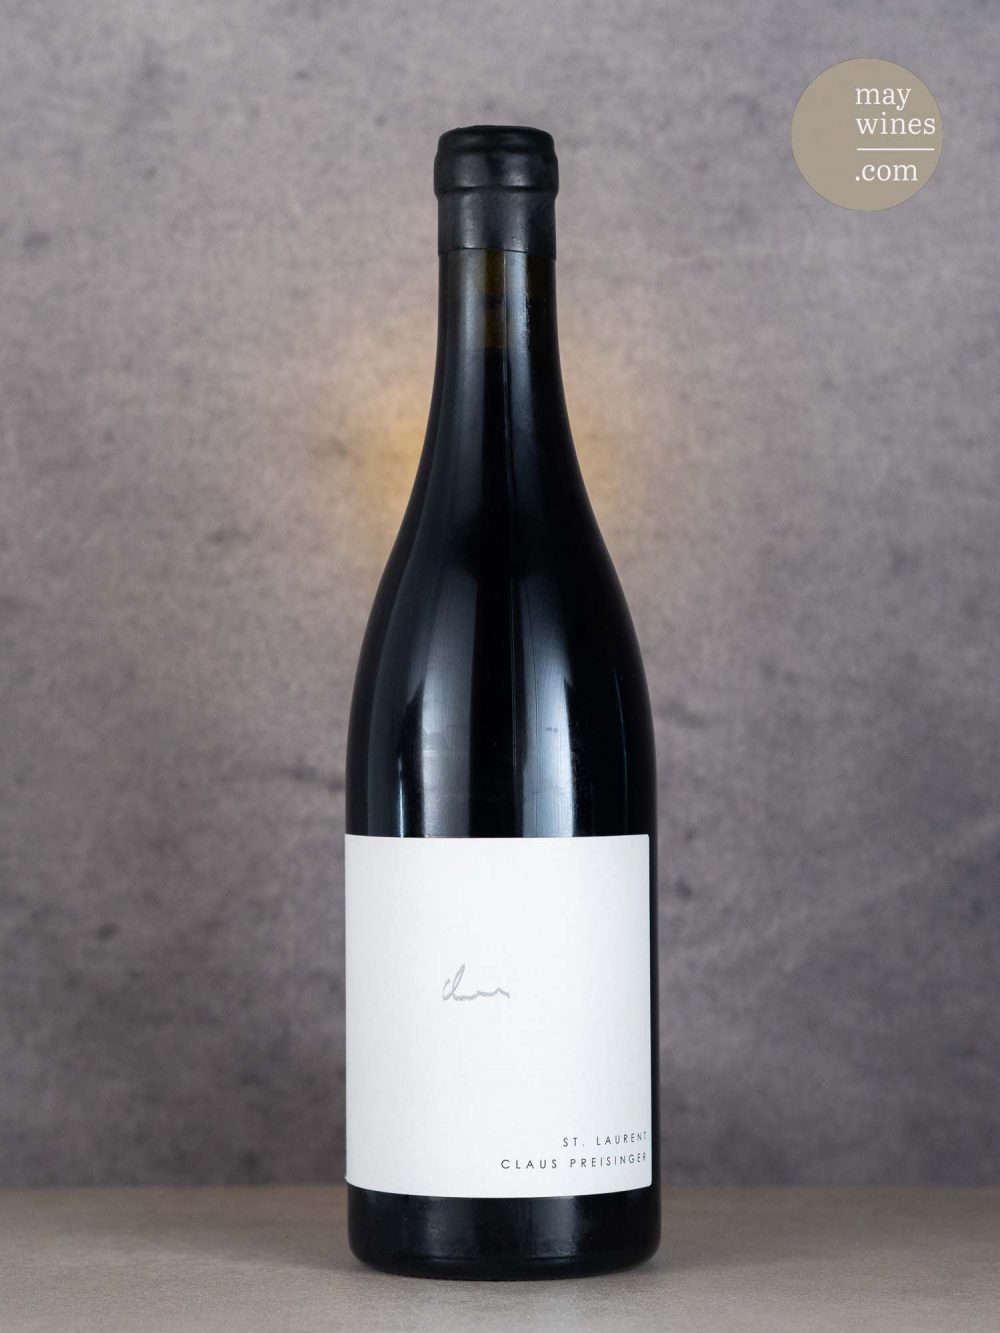 May Wines – Rotwein – 2011 St. Laurent - Weingut Claus Preisinger